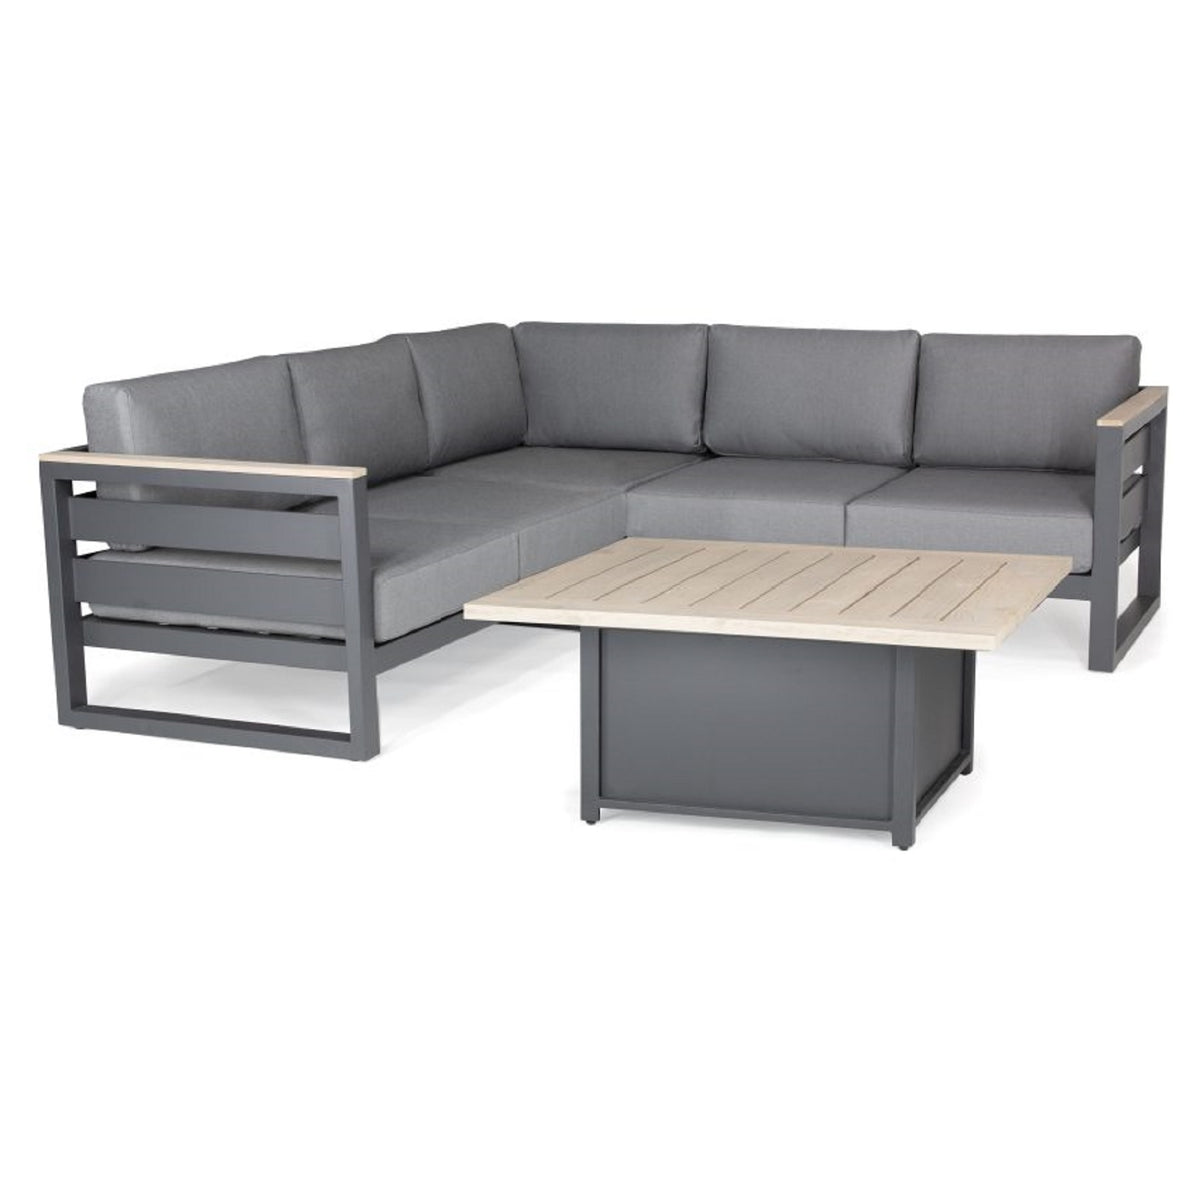 Kettler Elba Signature Grande Corner Sofa Set with High Low Adjustable Teak Slat Top Table